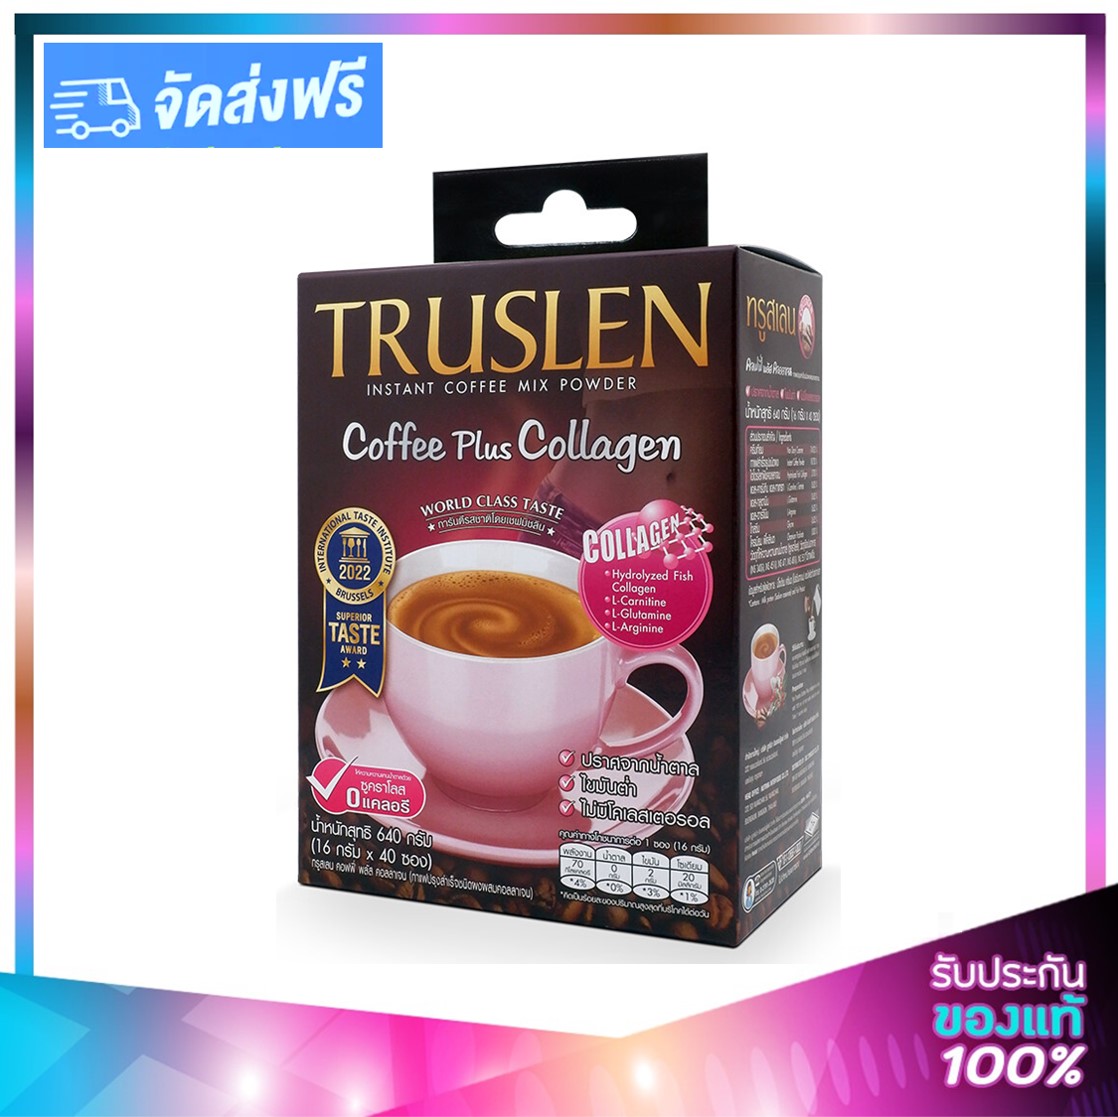 Truslen Coffee Plus Collagen - Truslen Coffee ทรูสเลน คอฟฟี